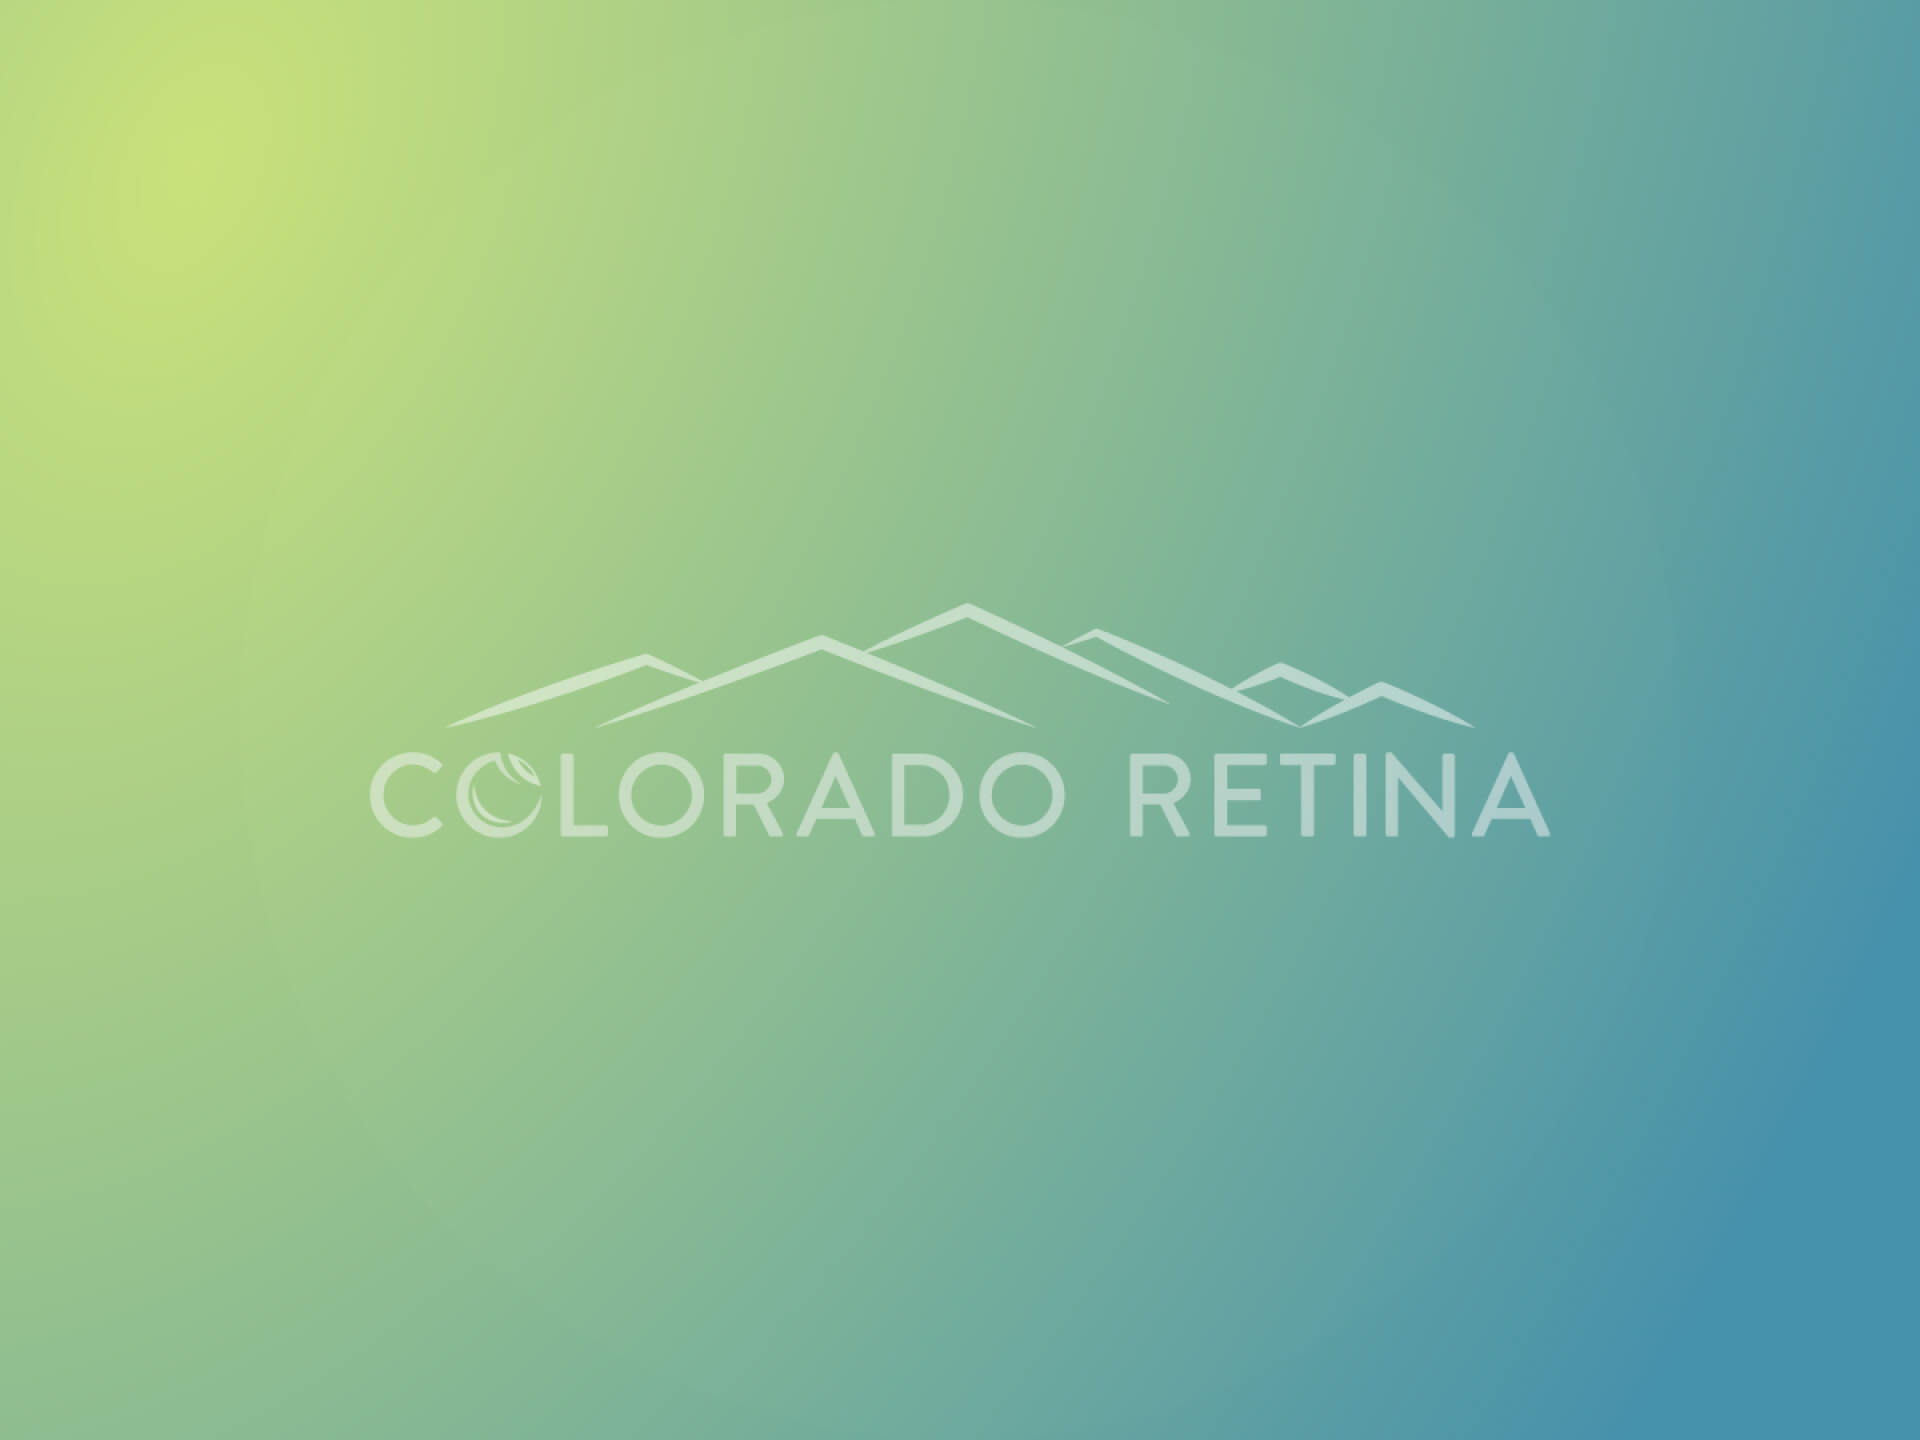 Colorado Retina mountains snippet